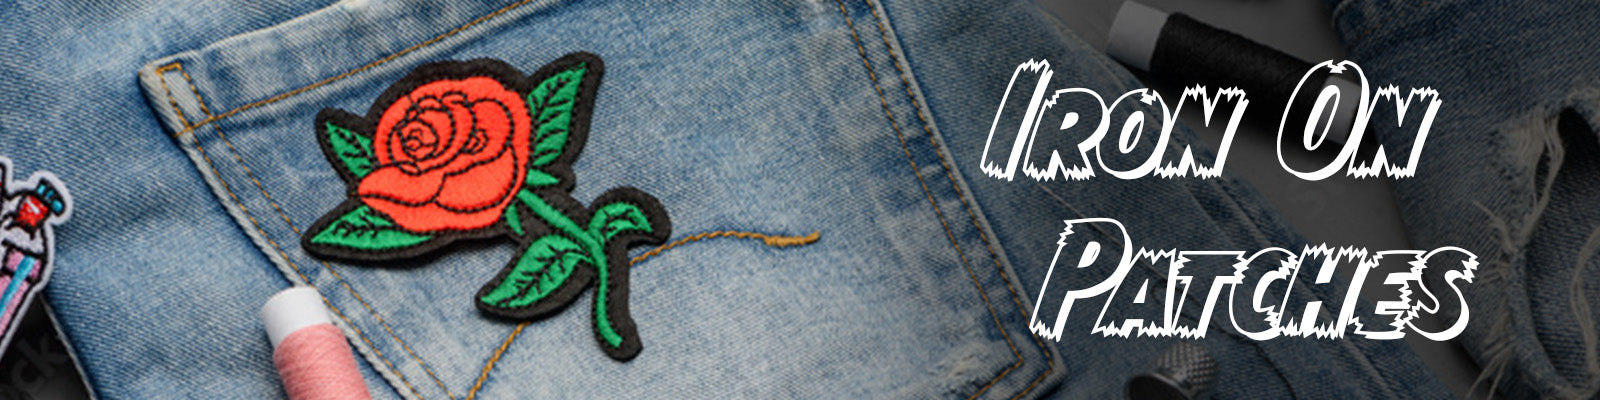 Share 146+ denim patches for inside jeans super hot - dedaotaonec